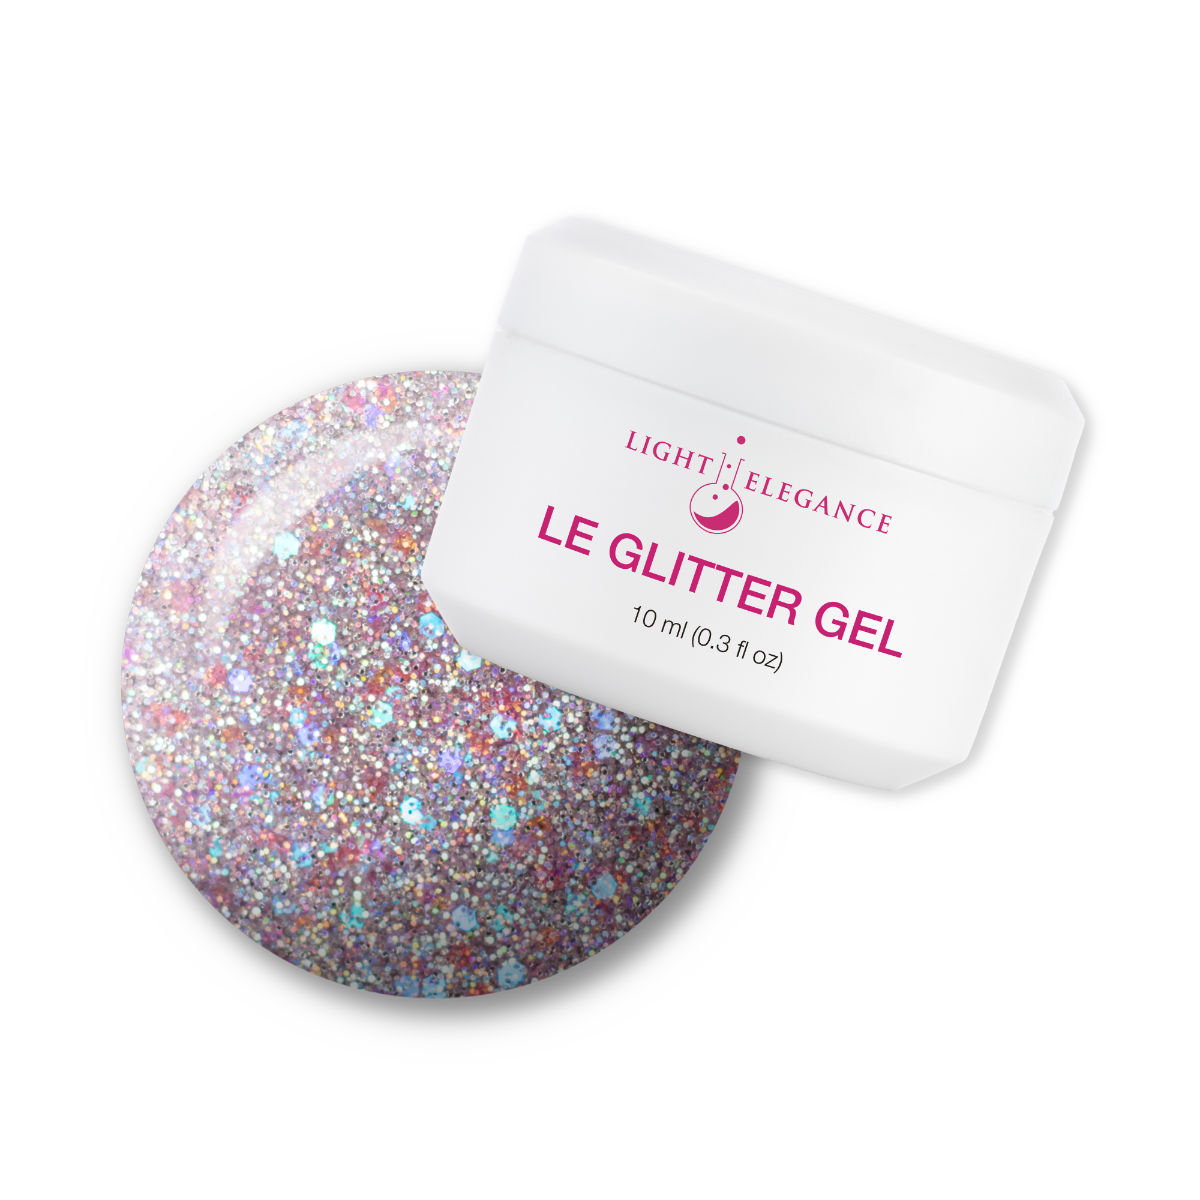 Light Elegance Glitter Gel - Sugar Coated :: New Packaging - Creata Beauty - Professional Beauty Products